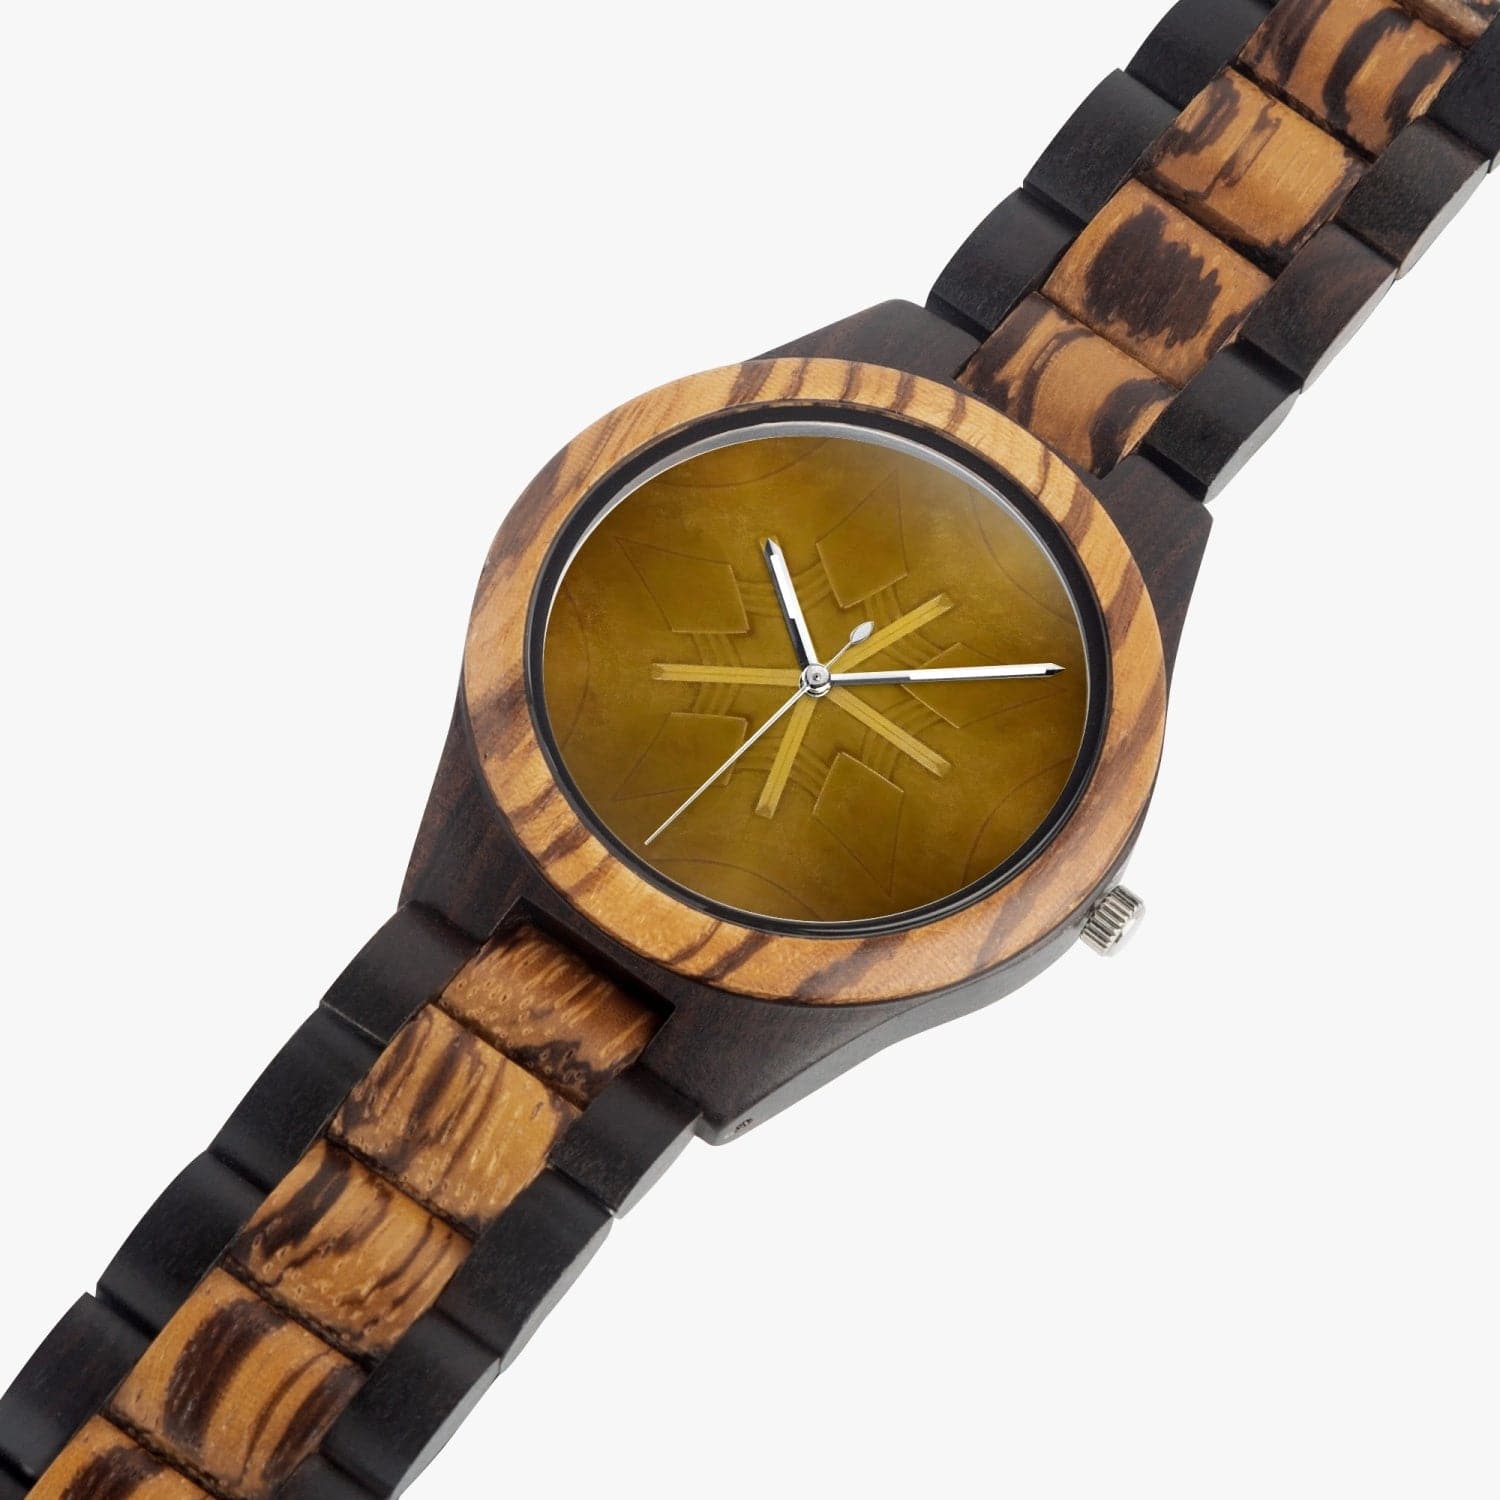 'Gold on Brown 4 Ebony Wooden Watch'at Sensus Studio